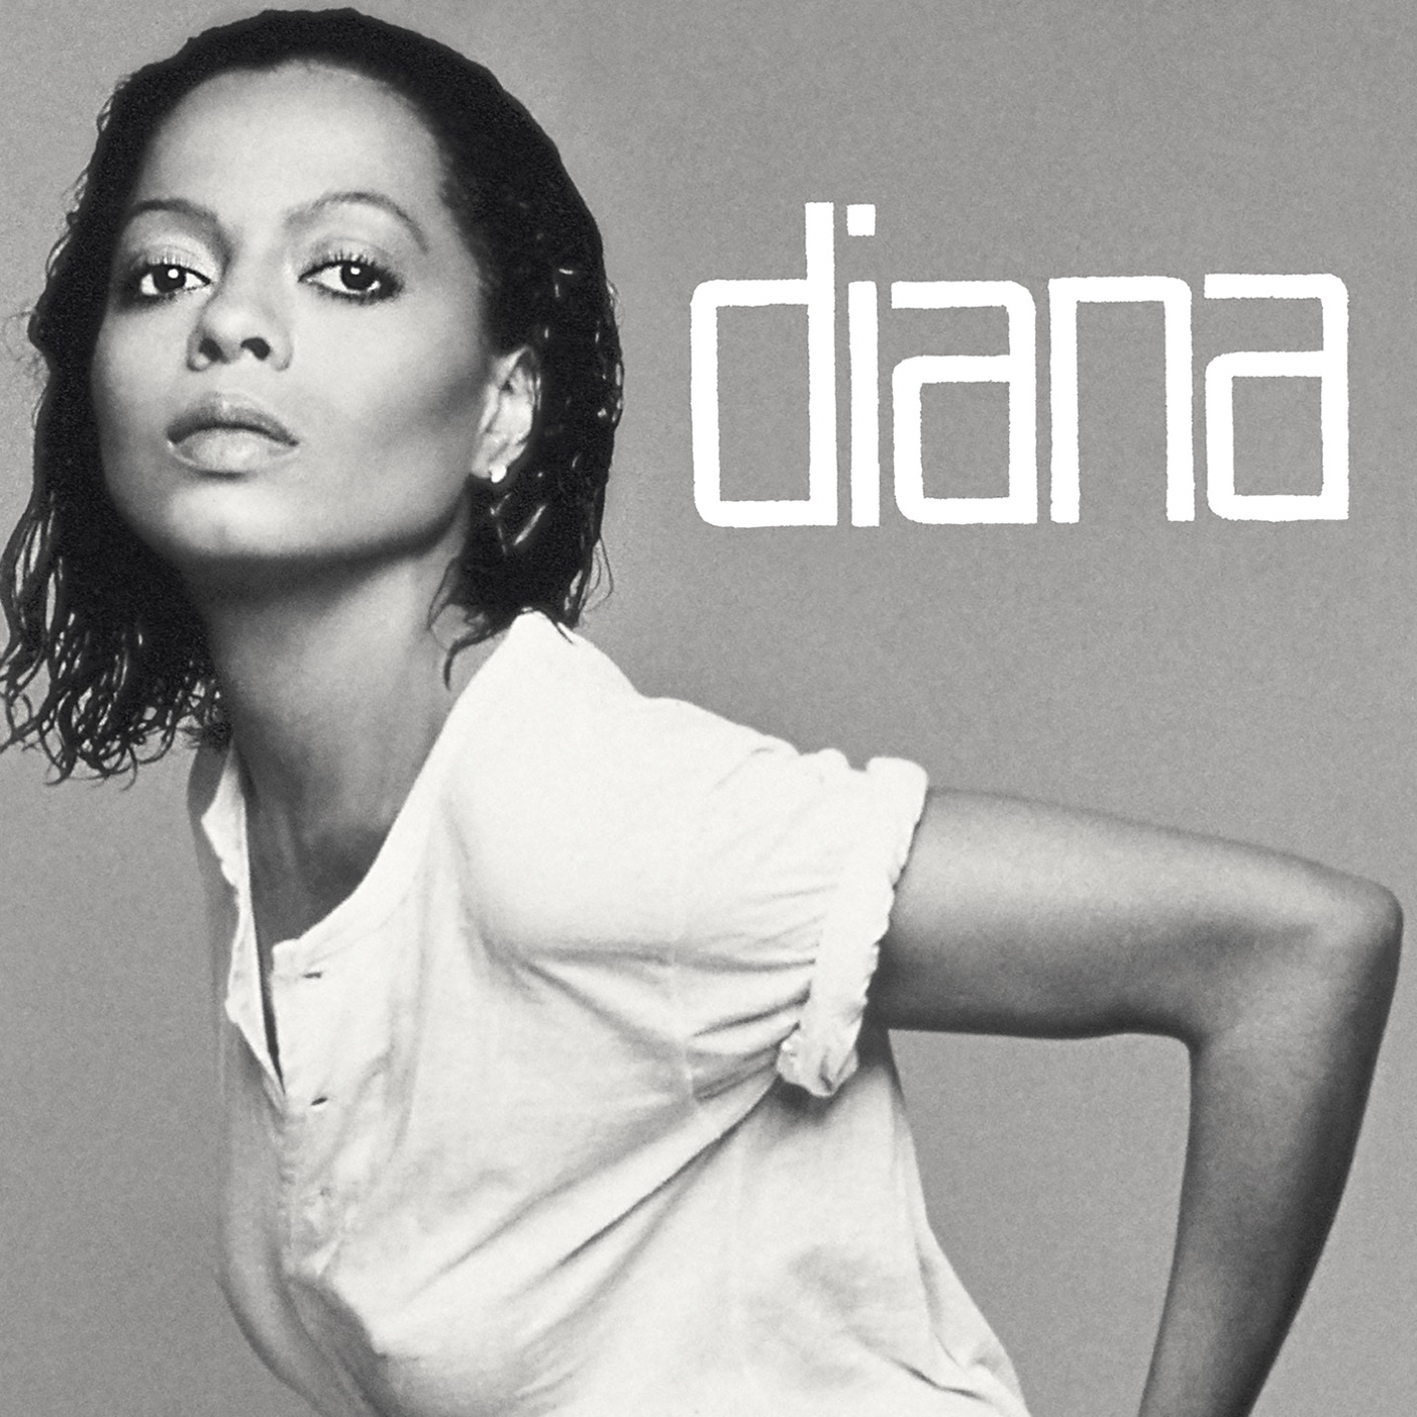 Diana Ross - 1980 - Diana [2016 Motown Records] 24-192